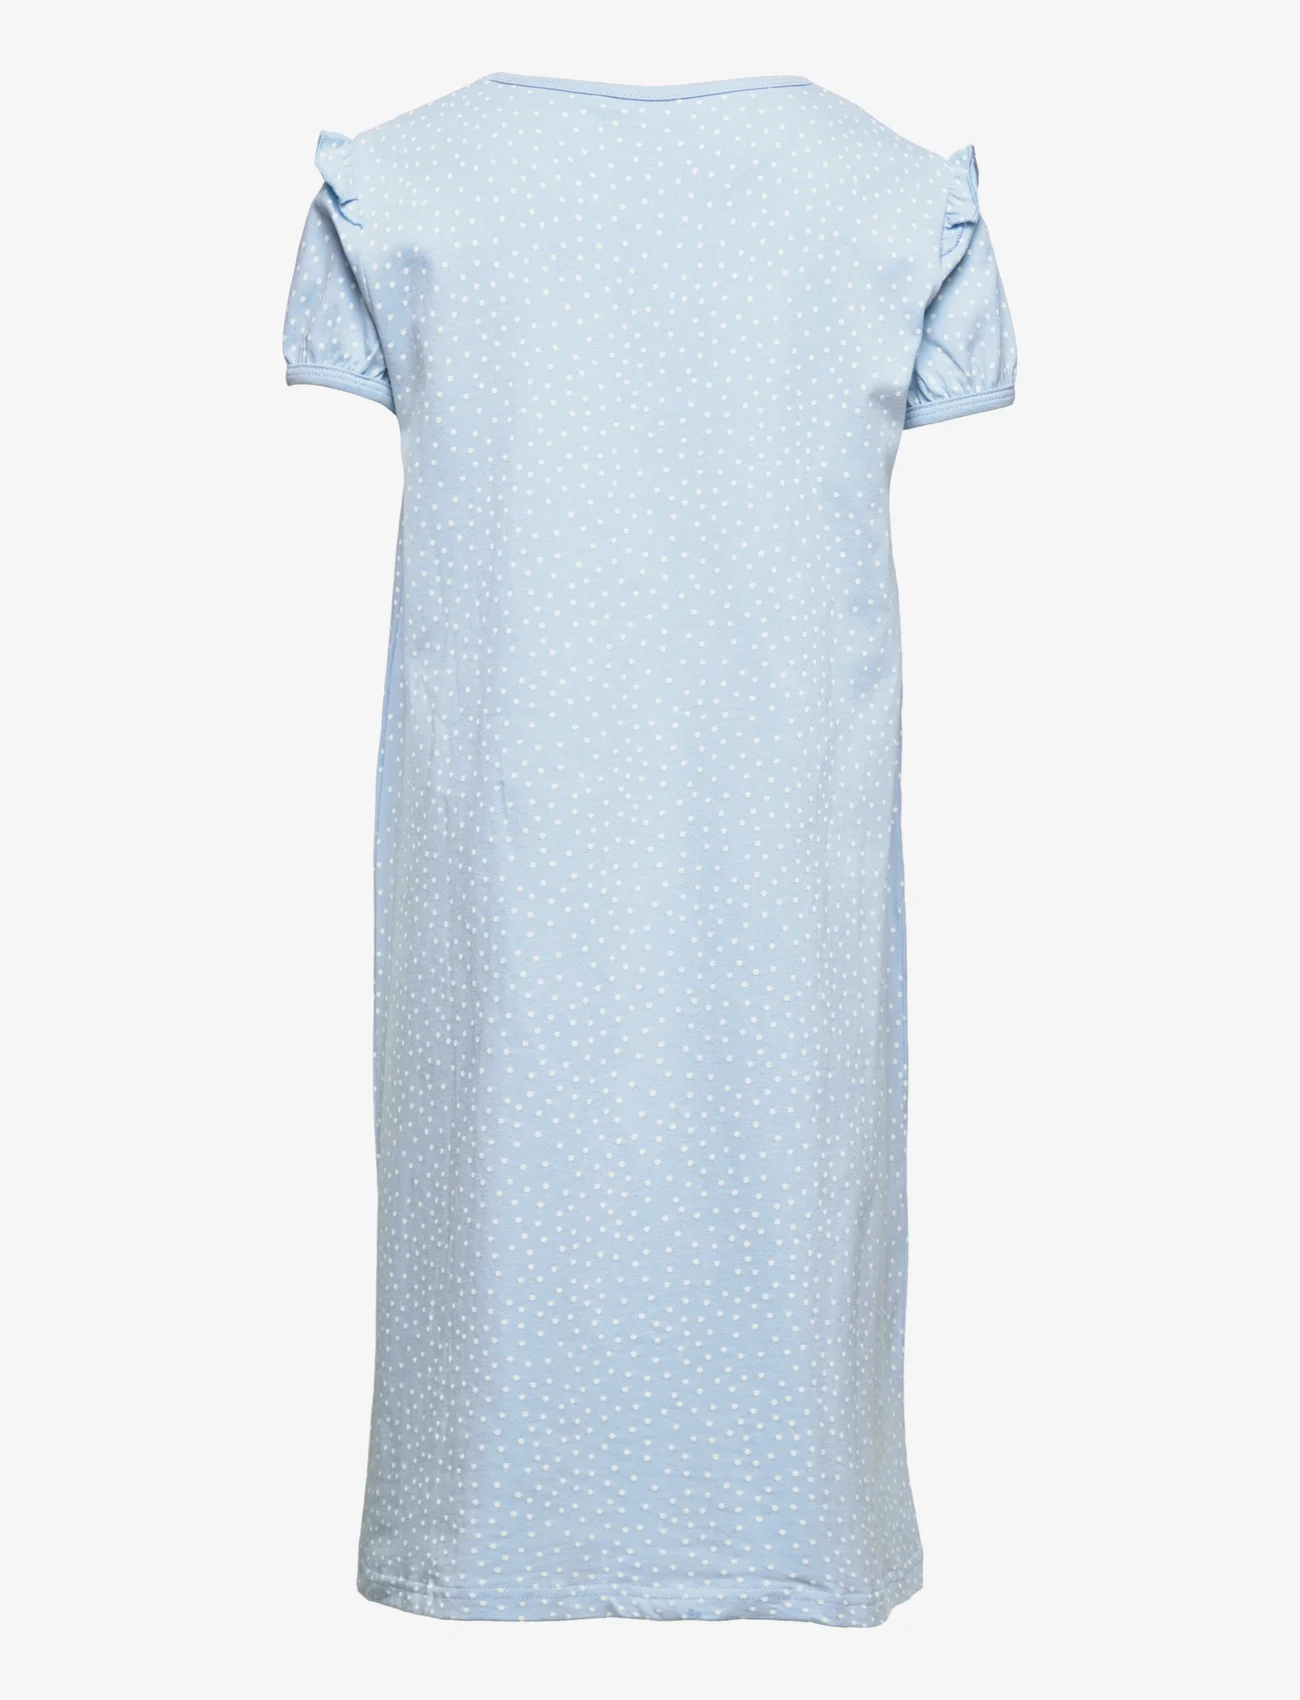 CeLaVi - Nightdress SS -AOP - short-sleeved casual dresses - dream blue - 1